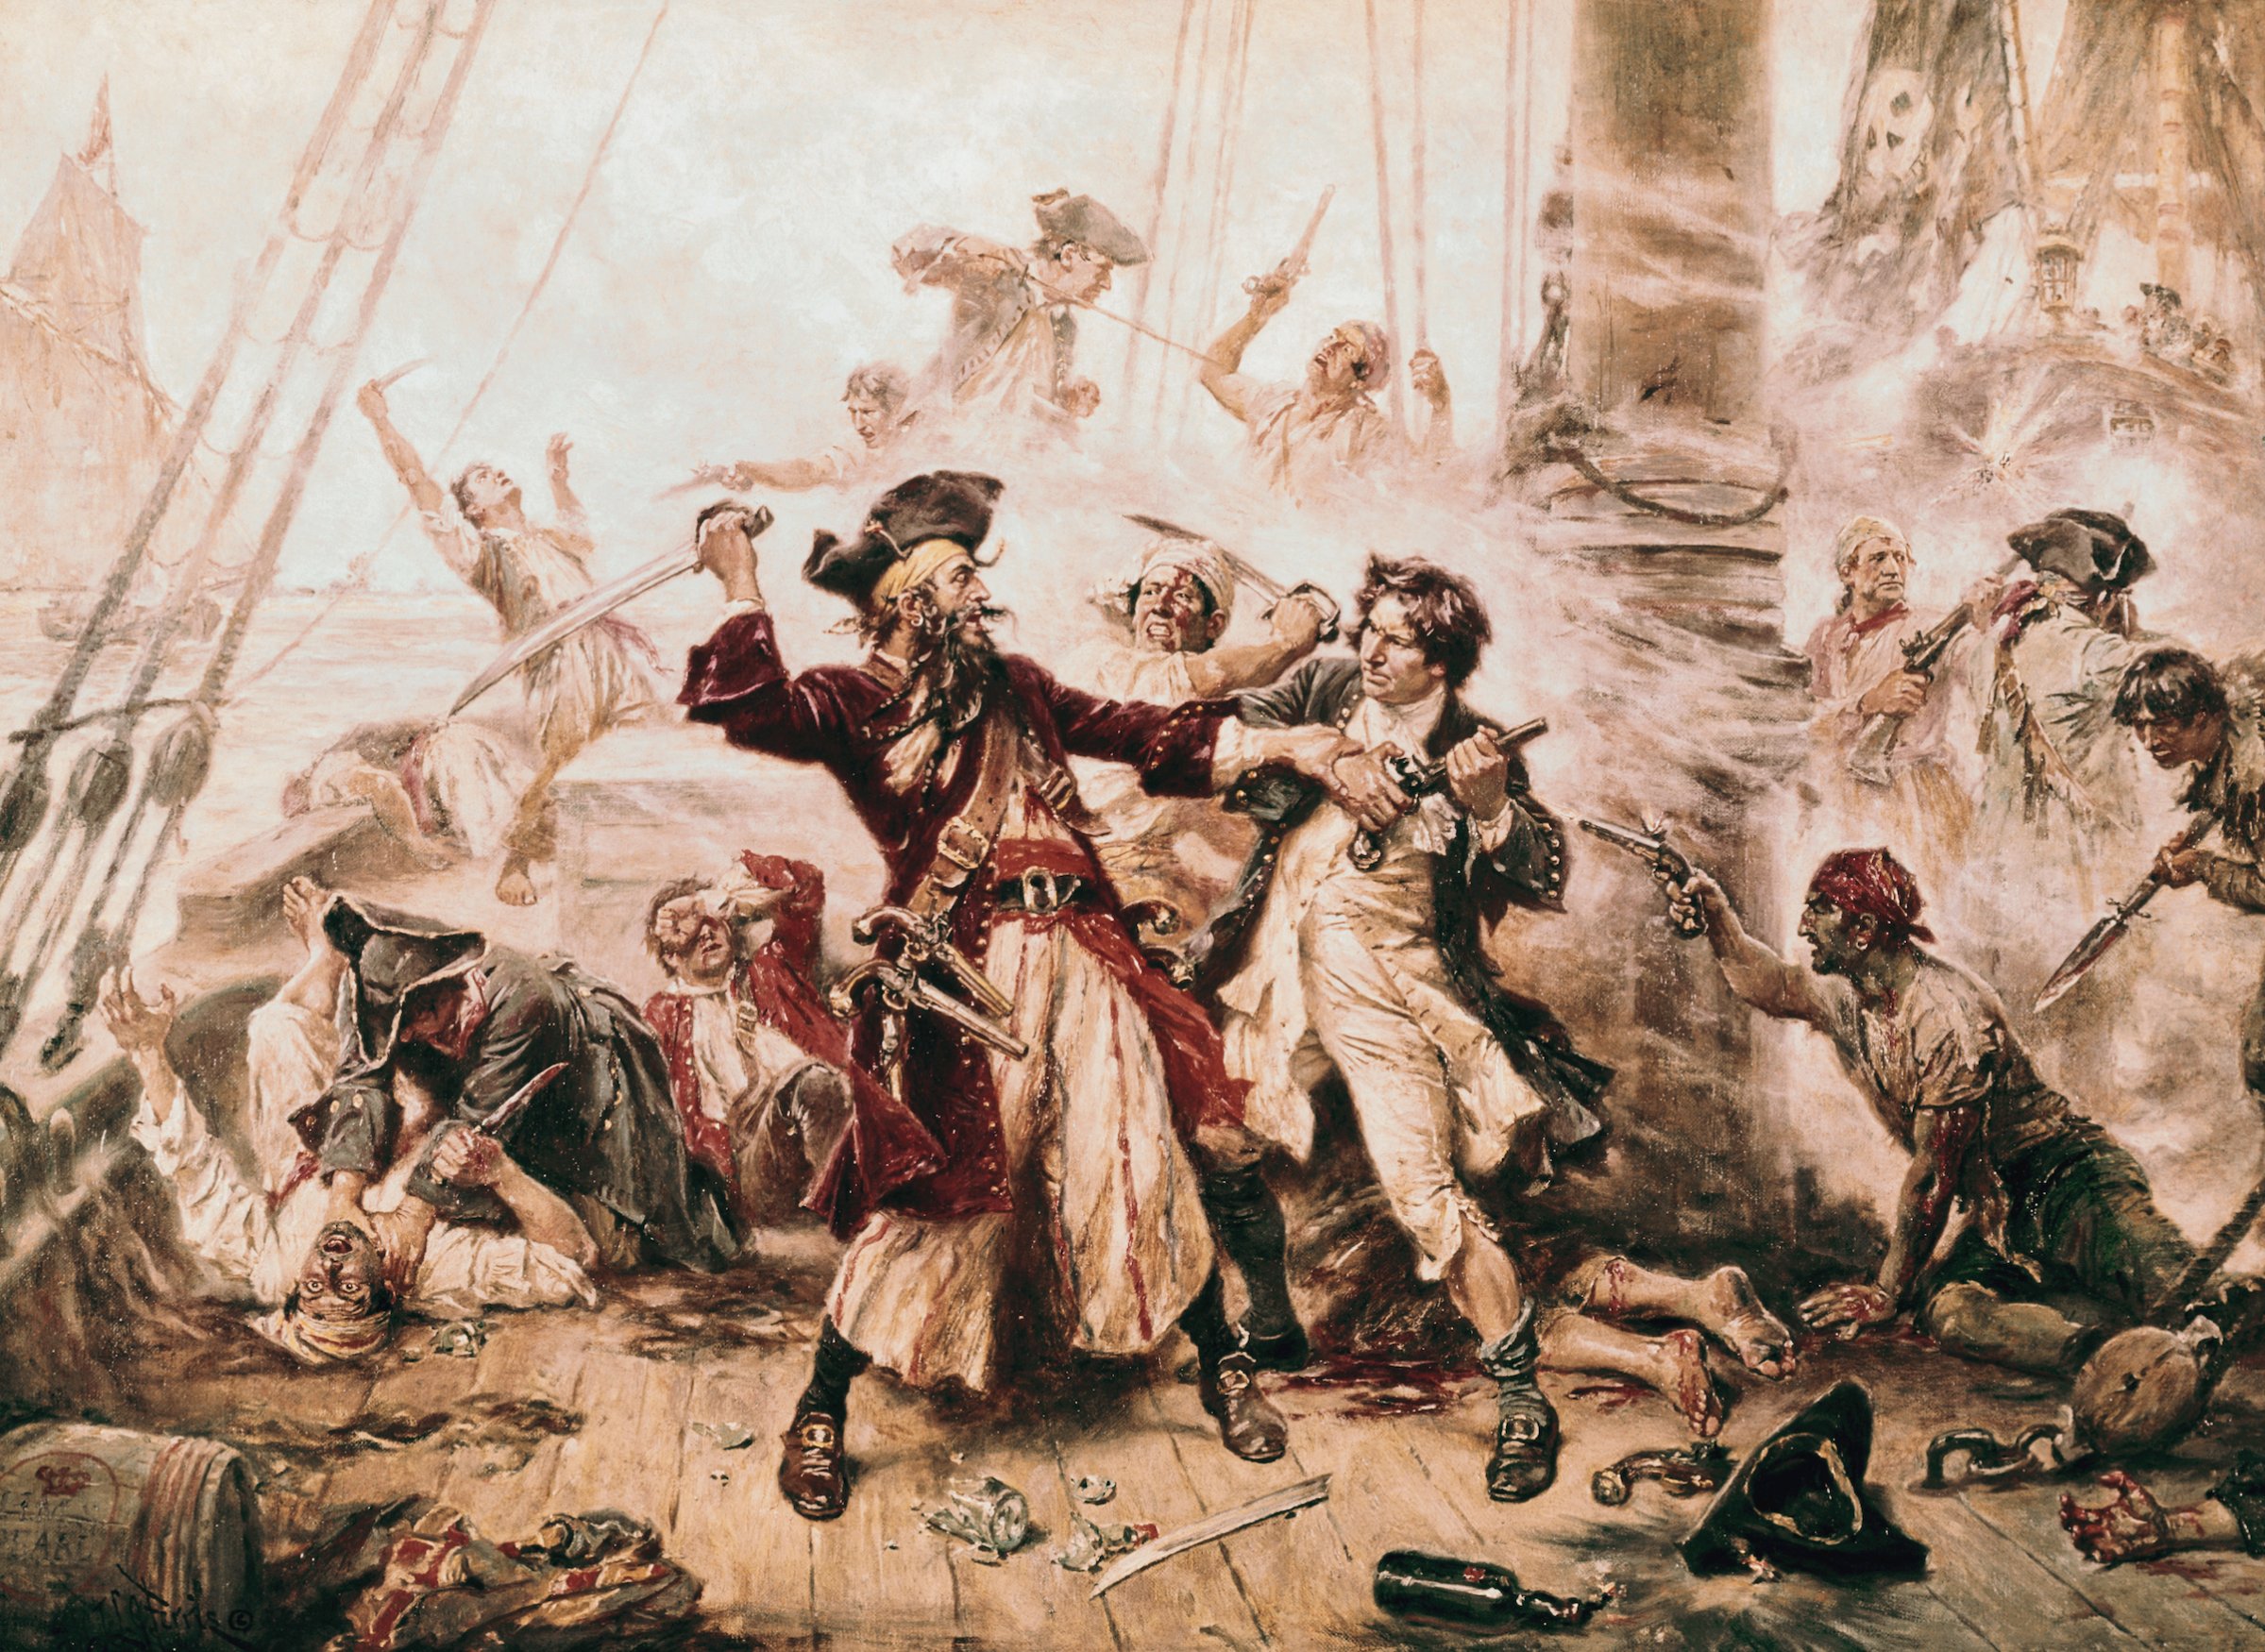 The Capture of the Pirate, Blackbeard, 1718 by Jean Leon Gerome Ferris